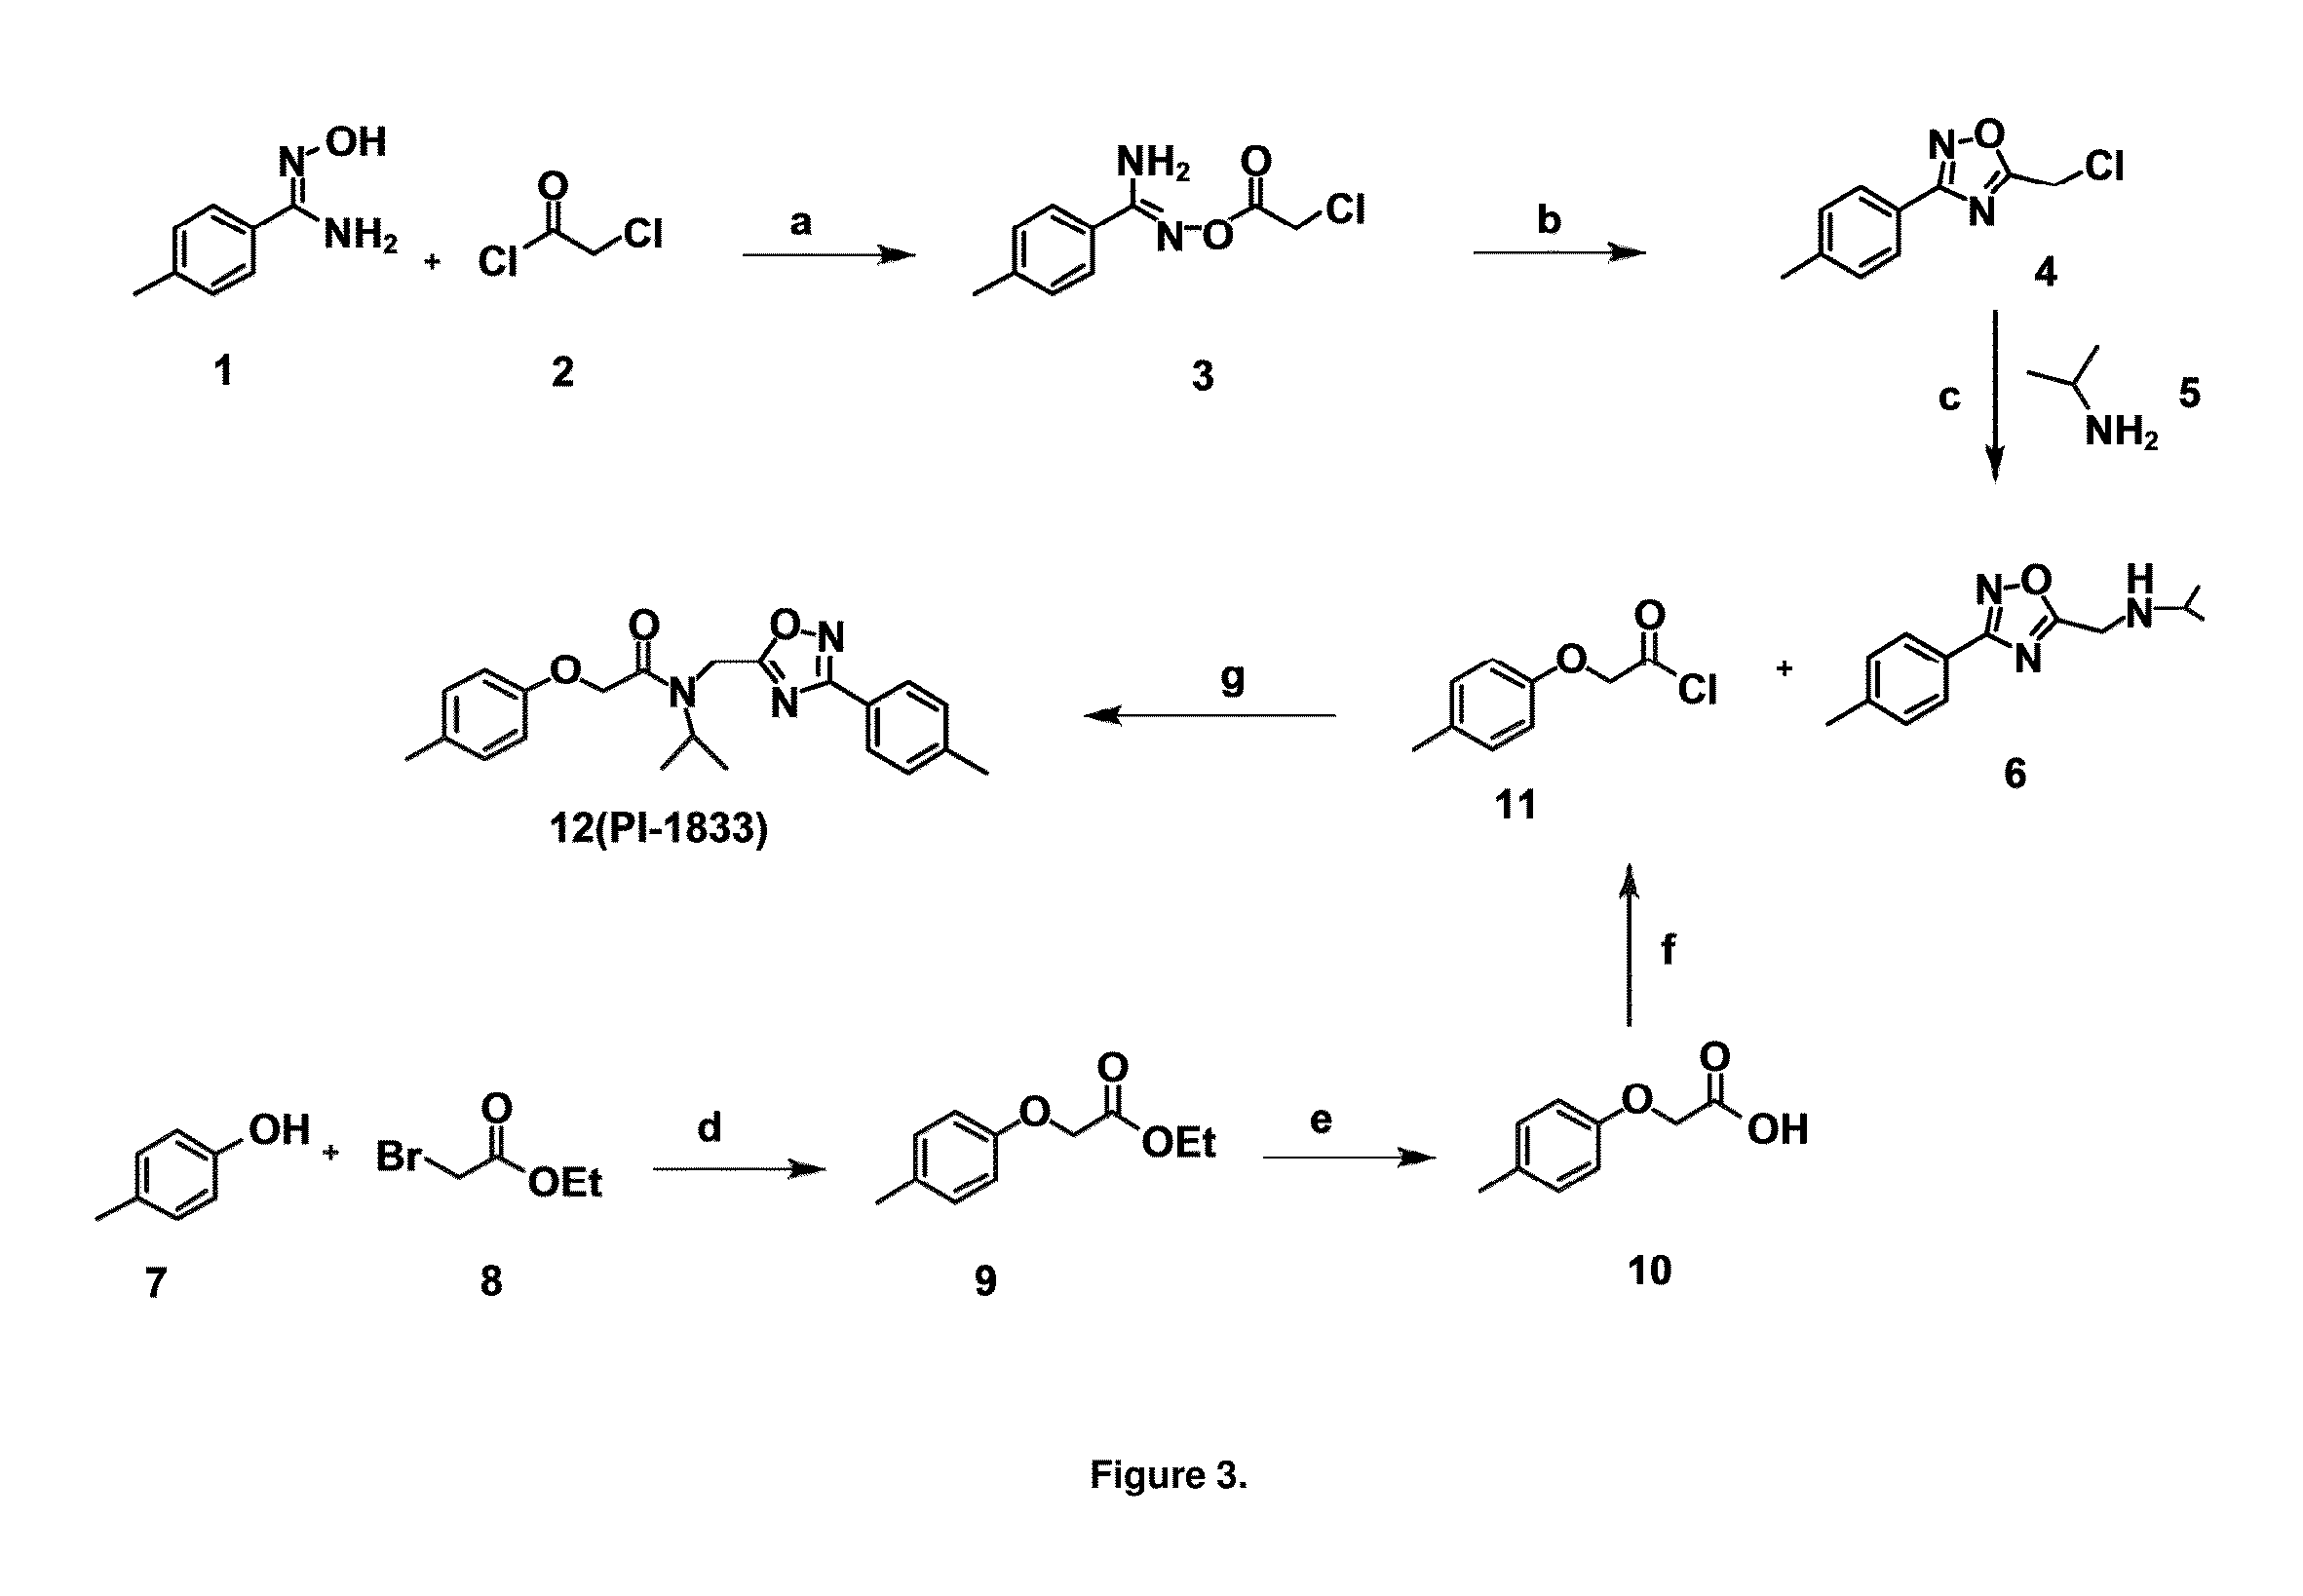 Proteasome chymotrypsin-like inhibition using pi-1833 analogs